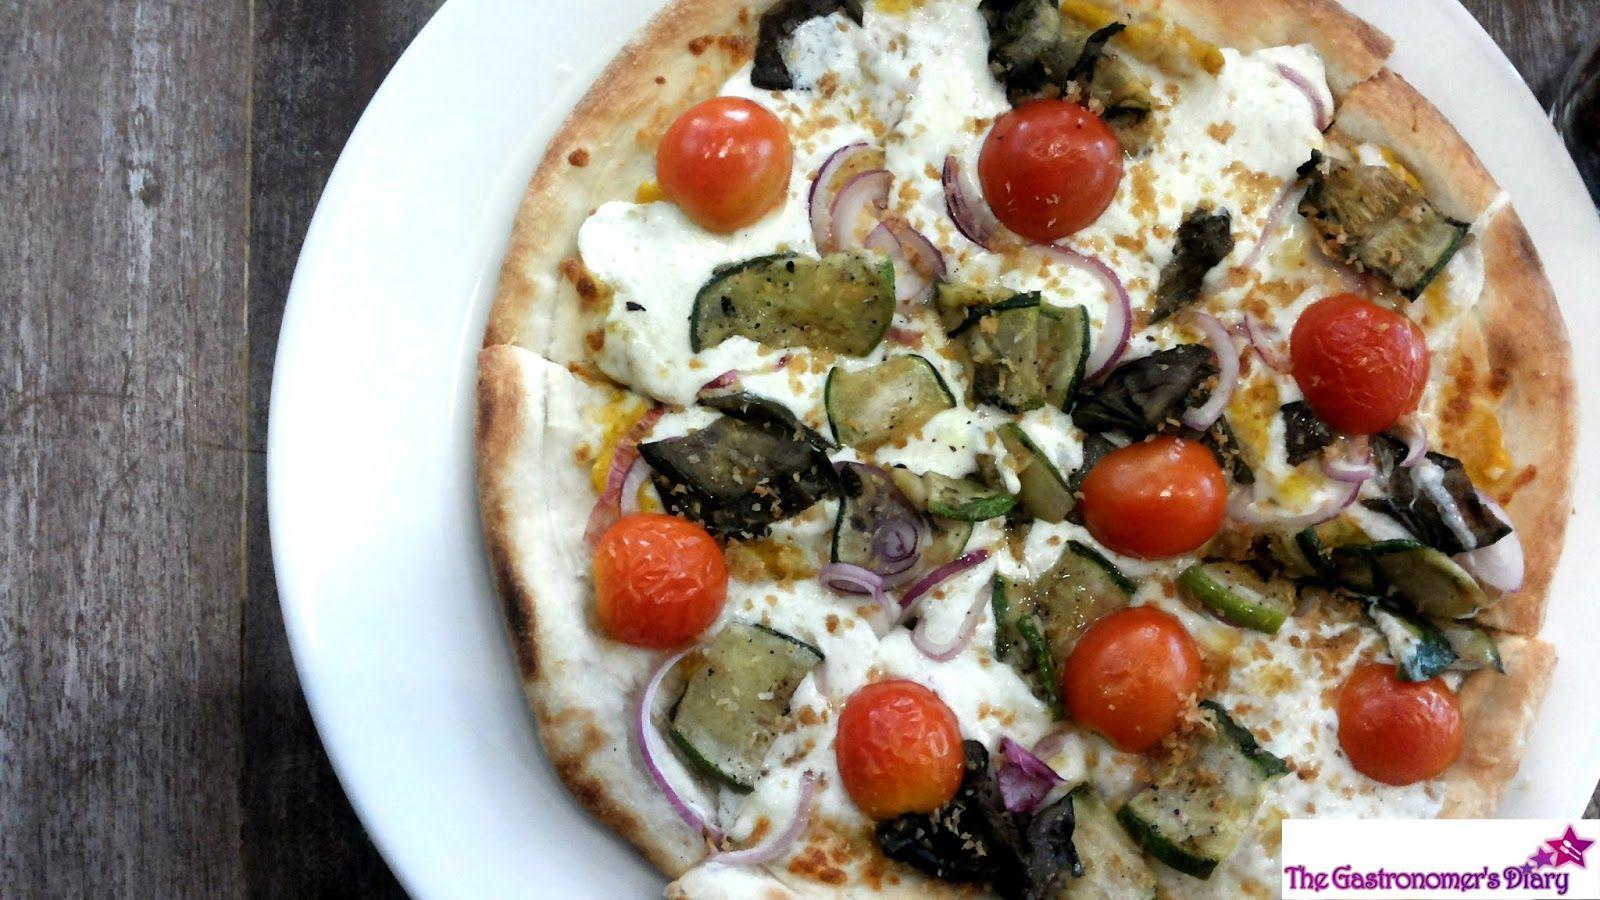 The Gastronomer's Diary: California Pizza Kitchen: National Pizza